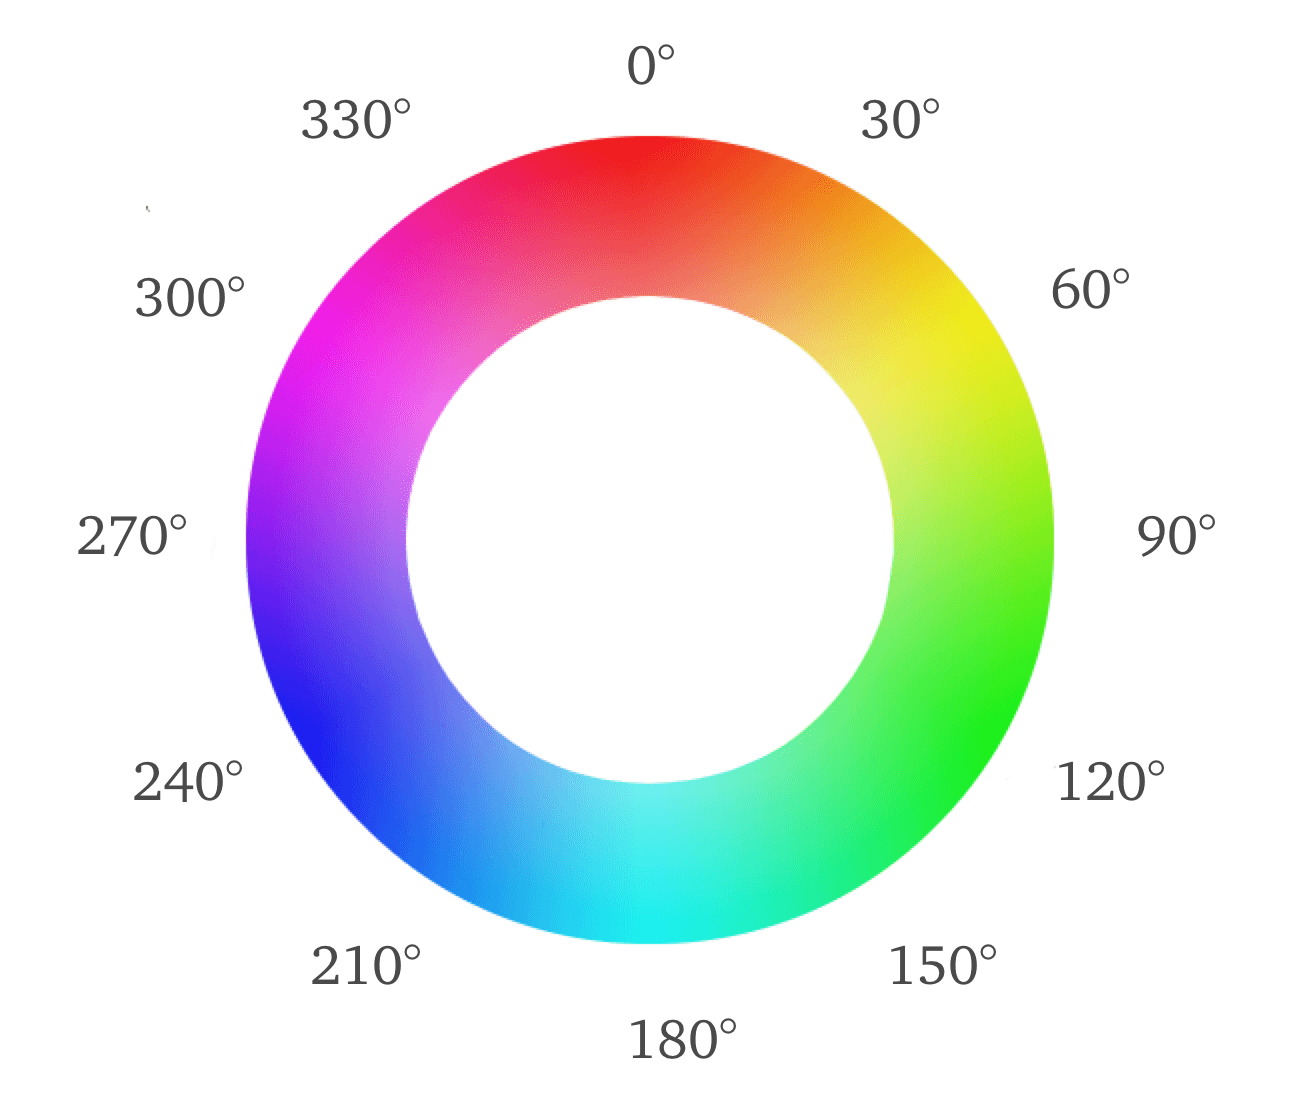 Hue angles on a color wheel